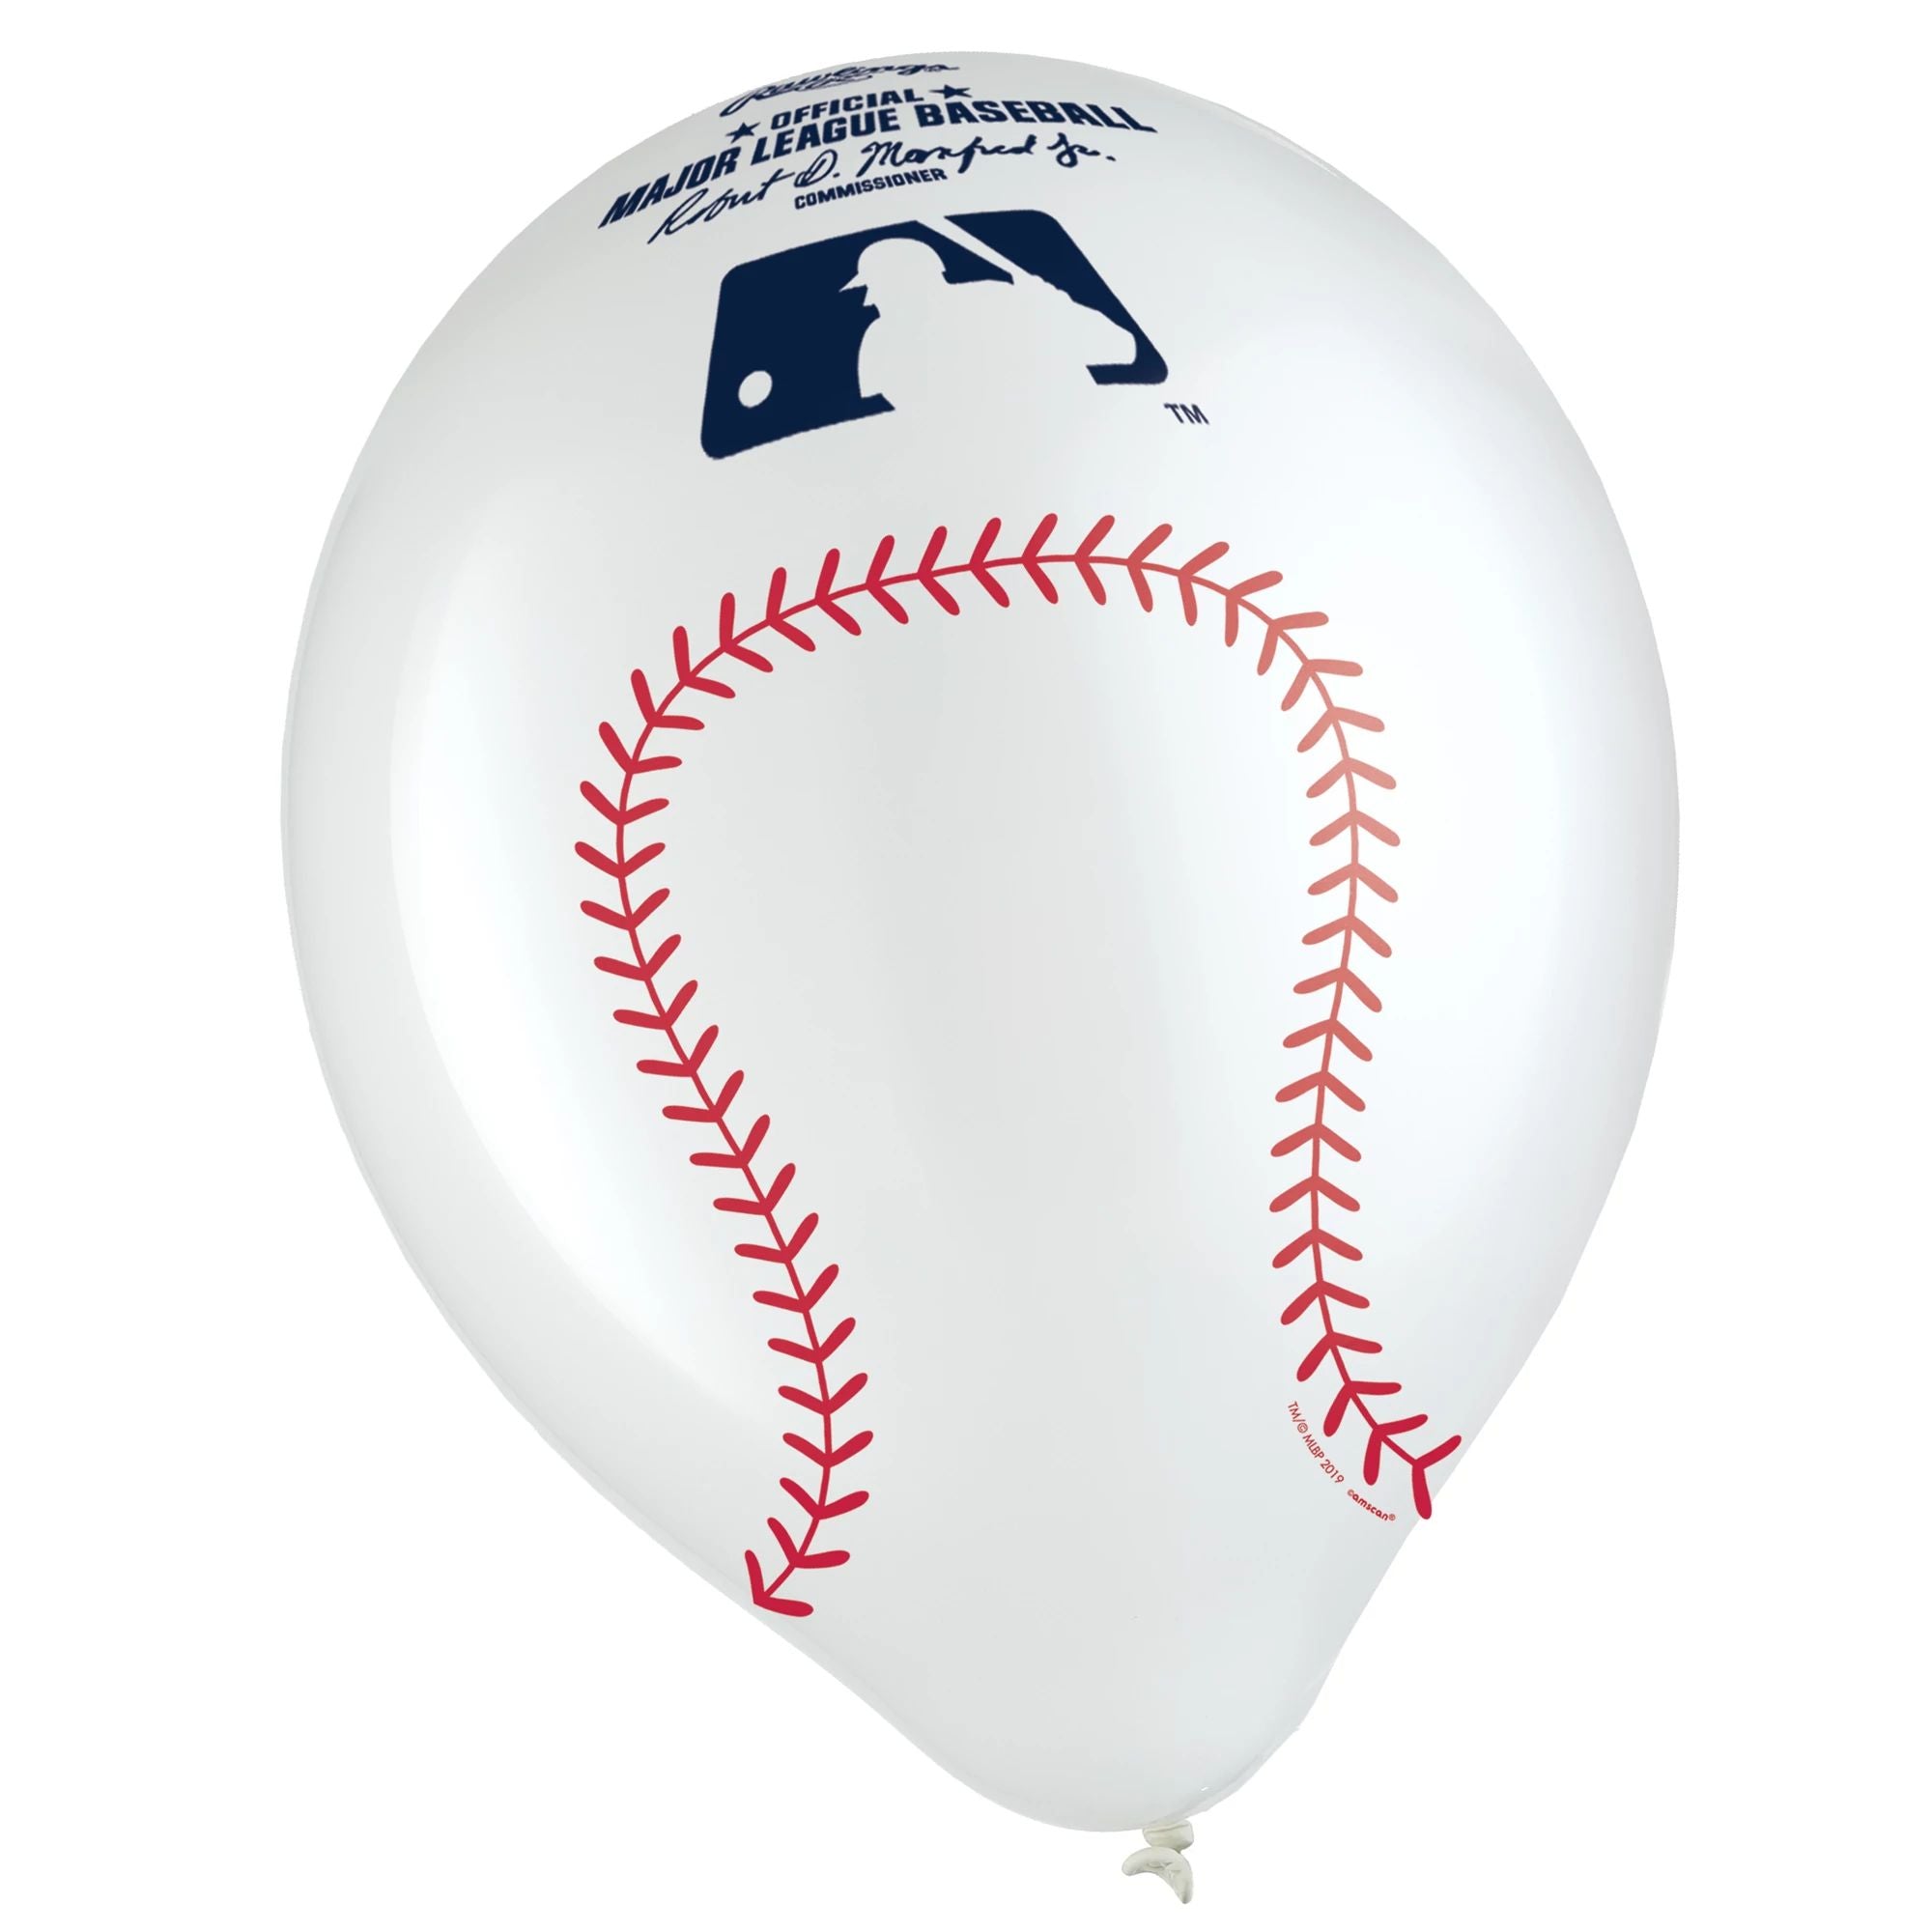 Rawlings Major League Baseball Printed Latex Balloons